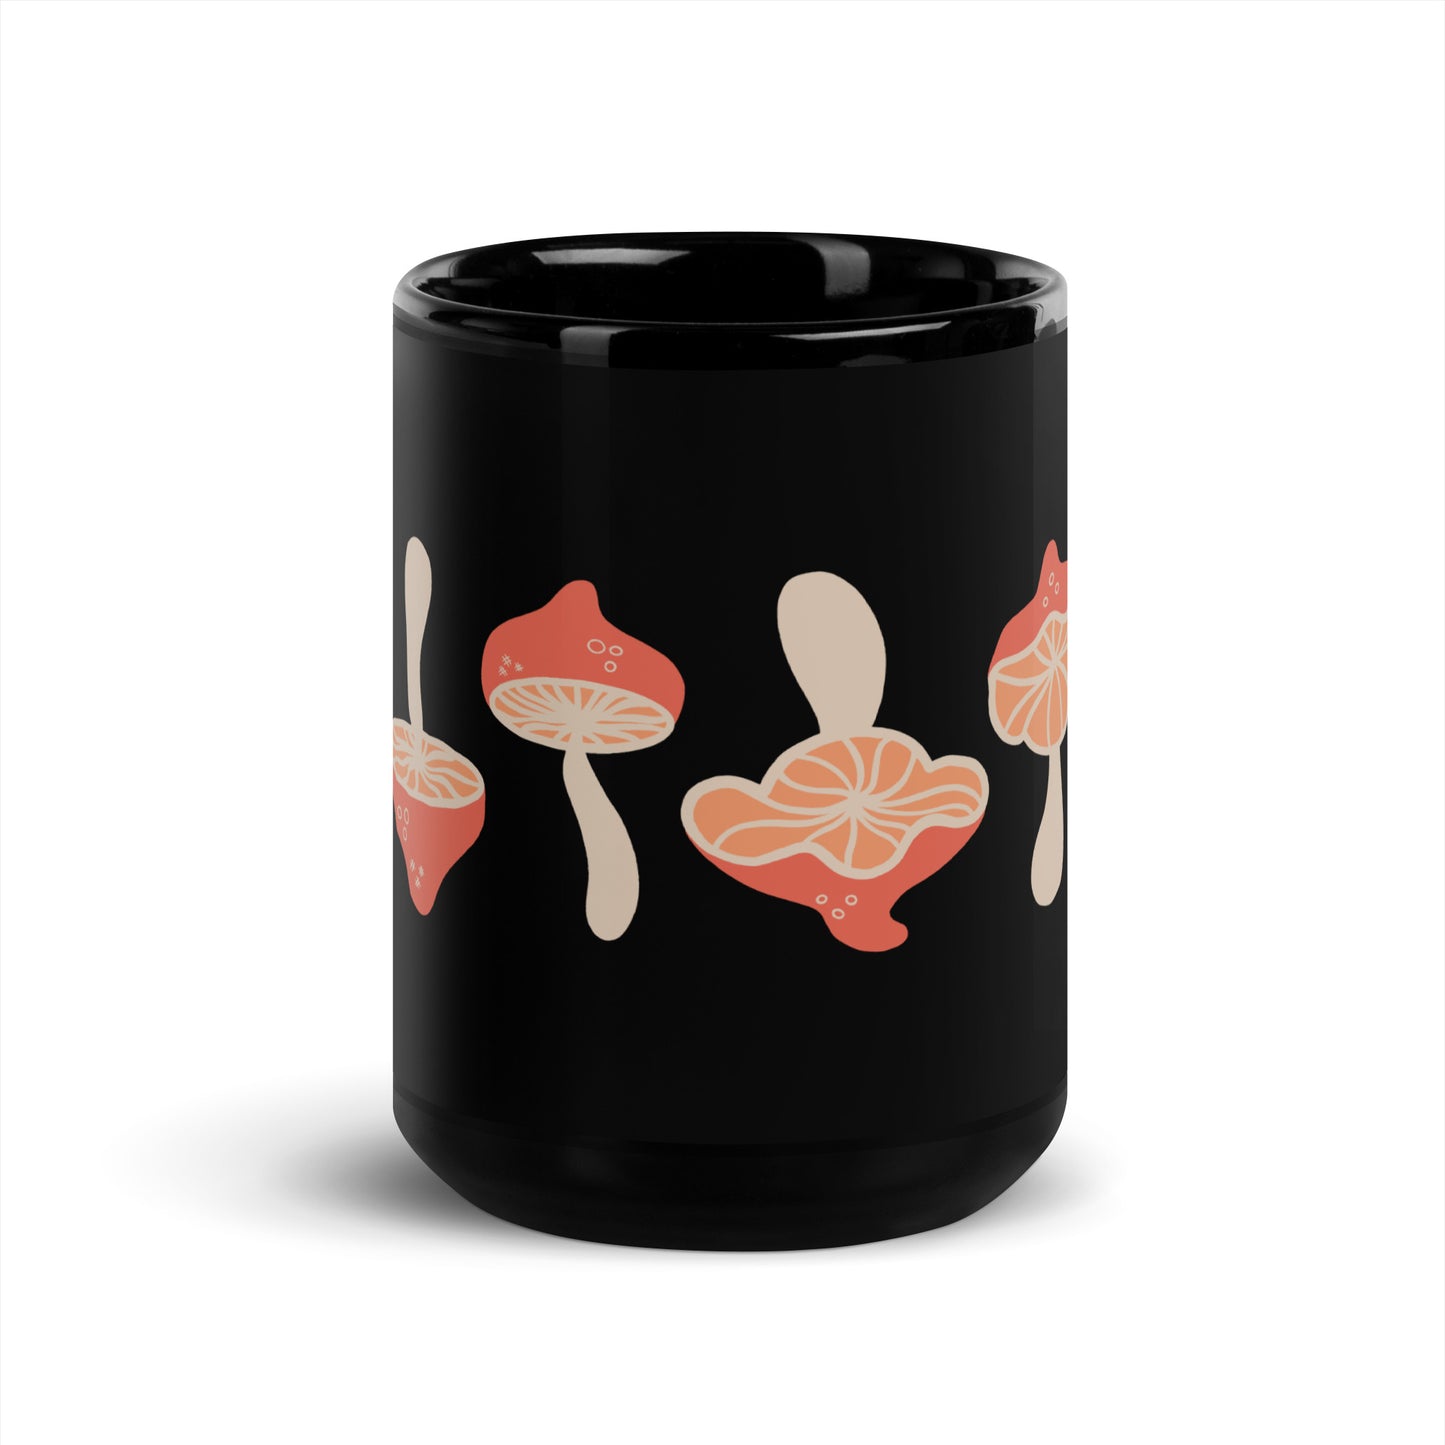 Mysterious Mushrooms Black Glossy Mug